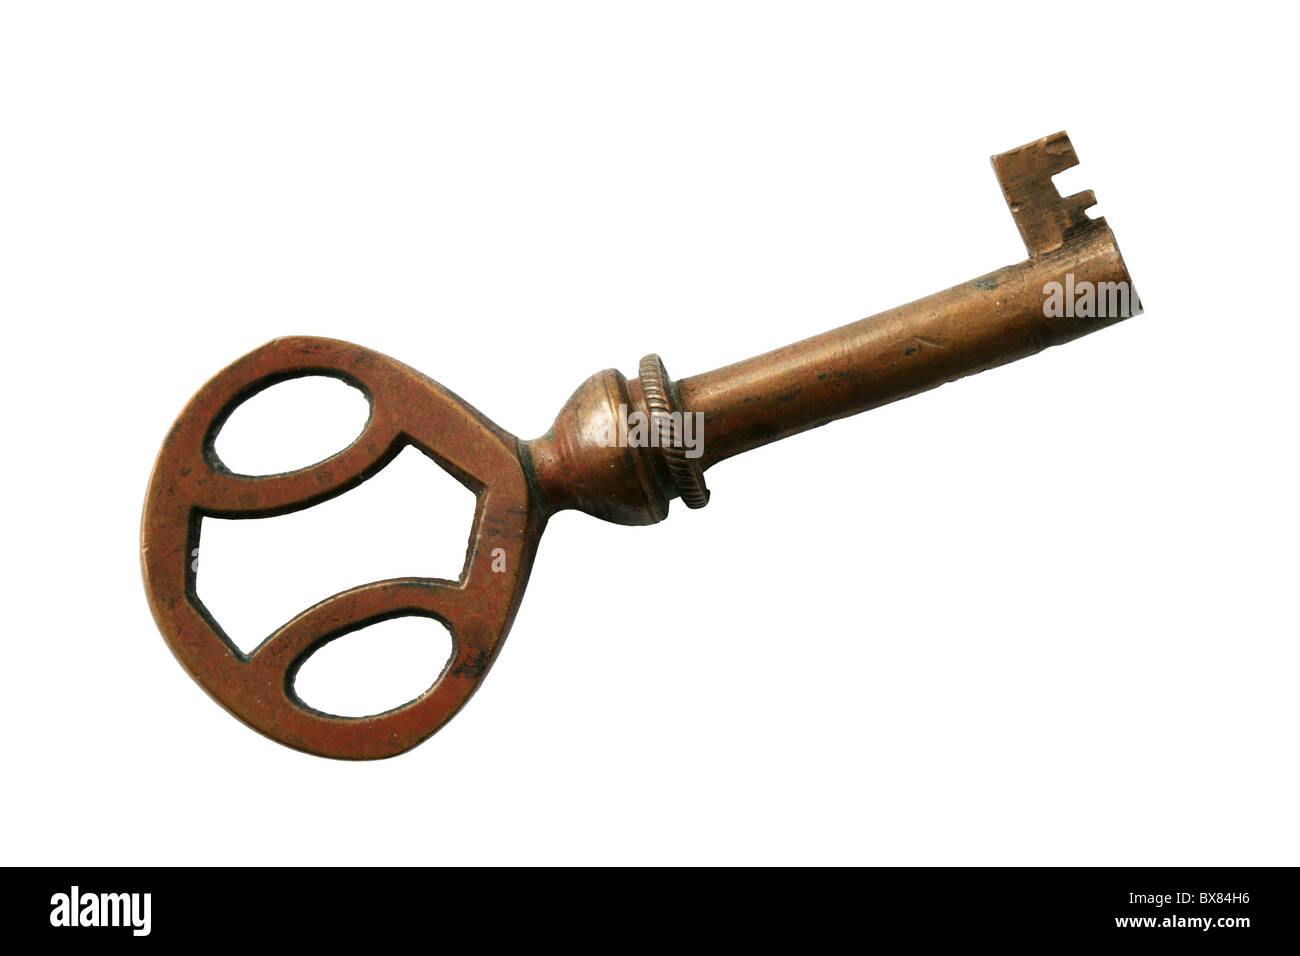 Old brass key Stock Photo by ©jianghongyan 52172335